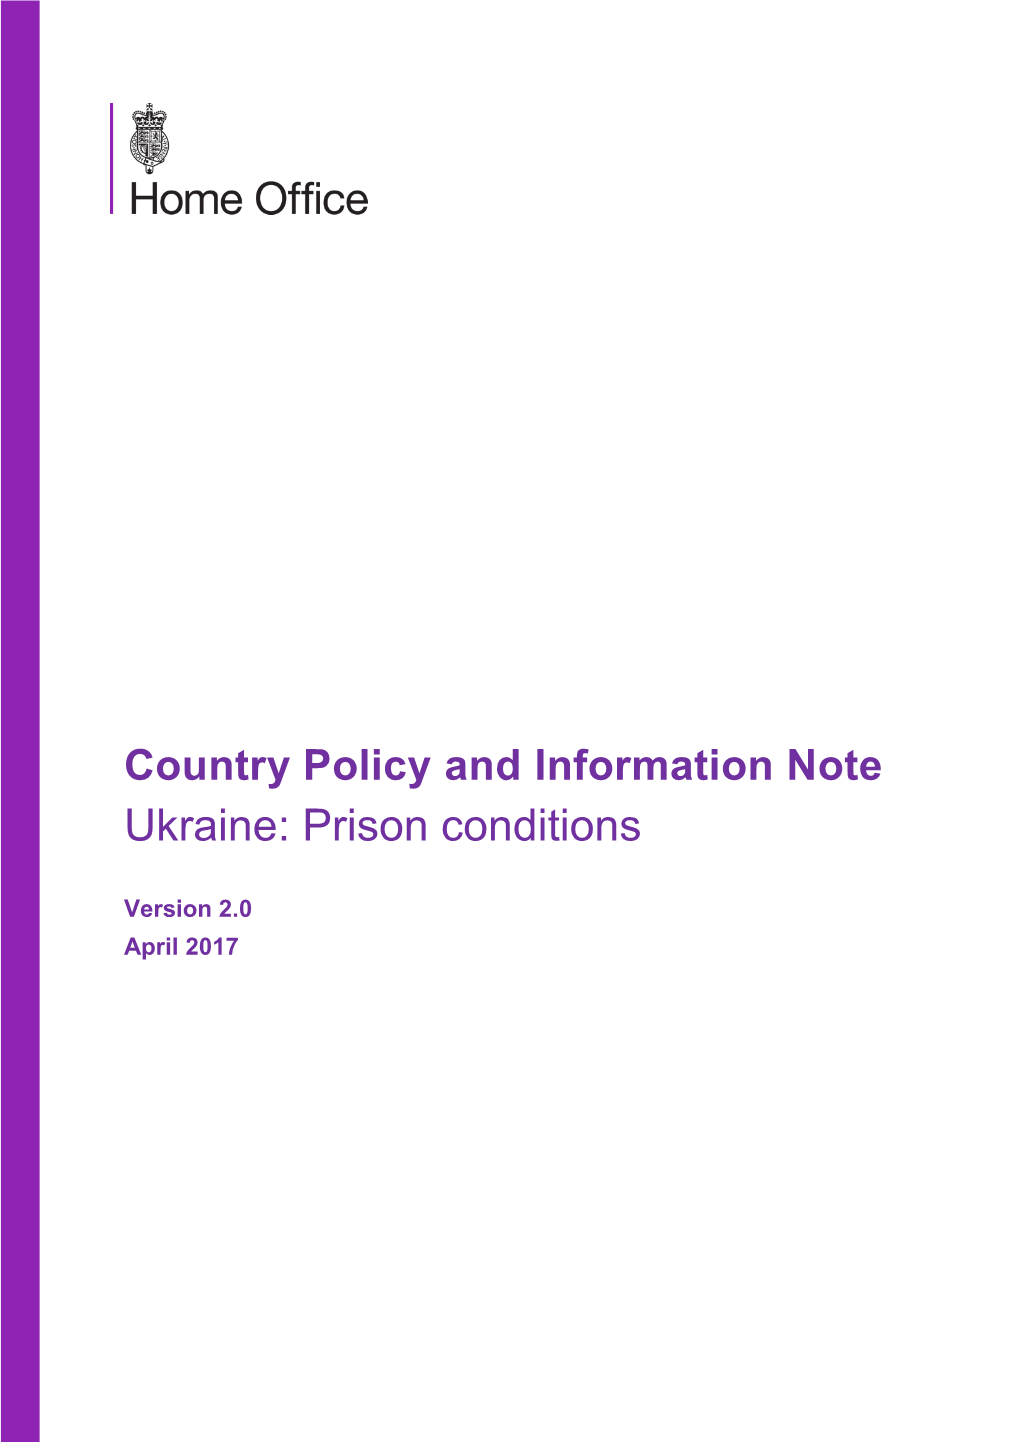 Ukraine: Prison Conditions